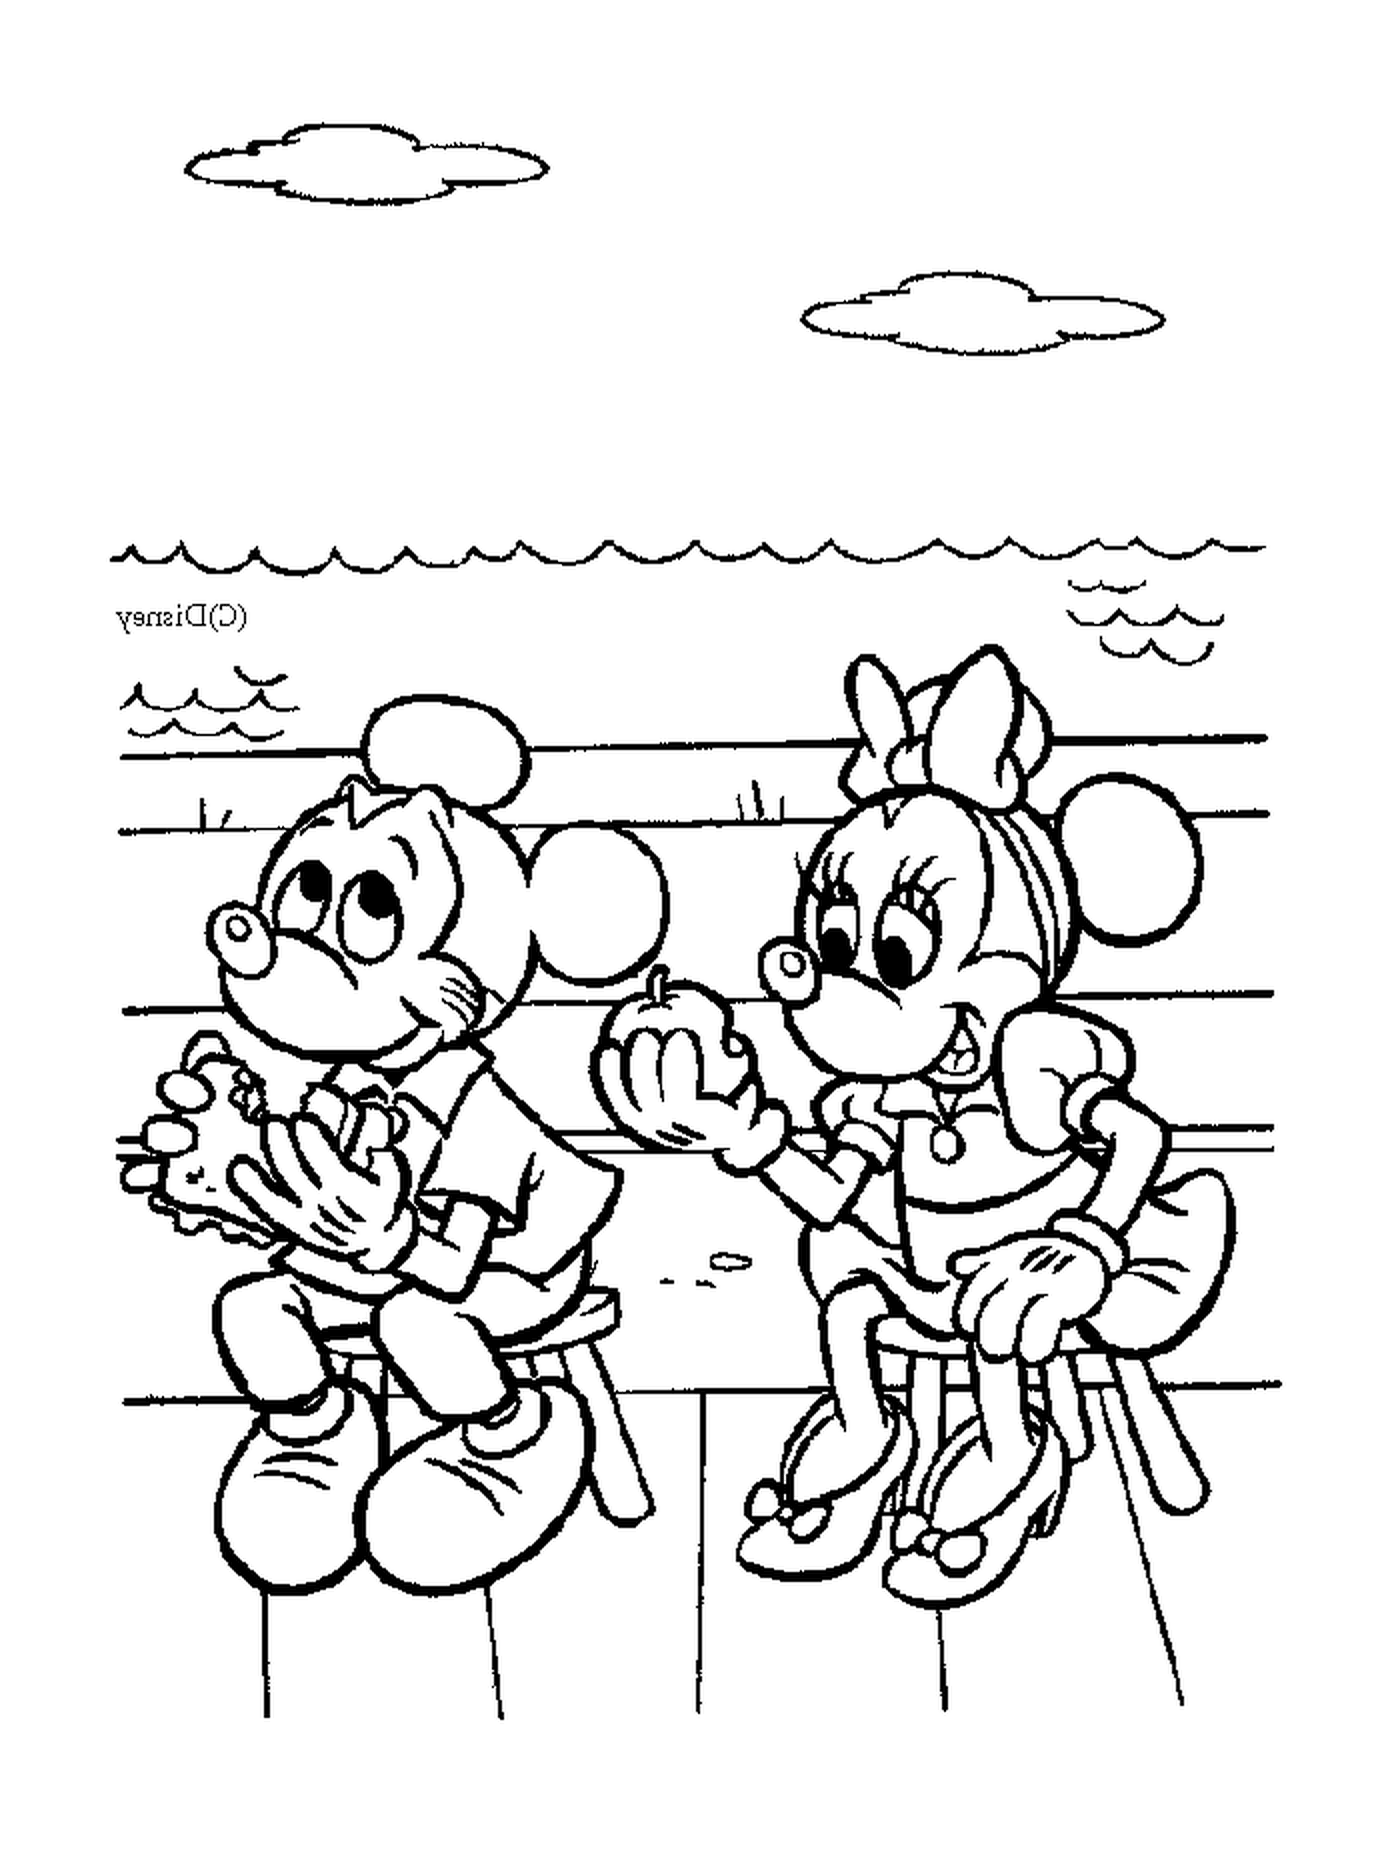  Mickey e Minnie mangiano: seduti su una panchina 